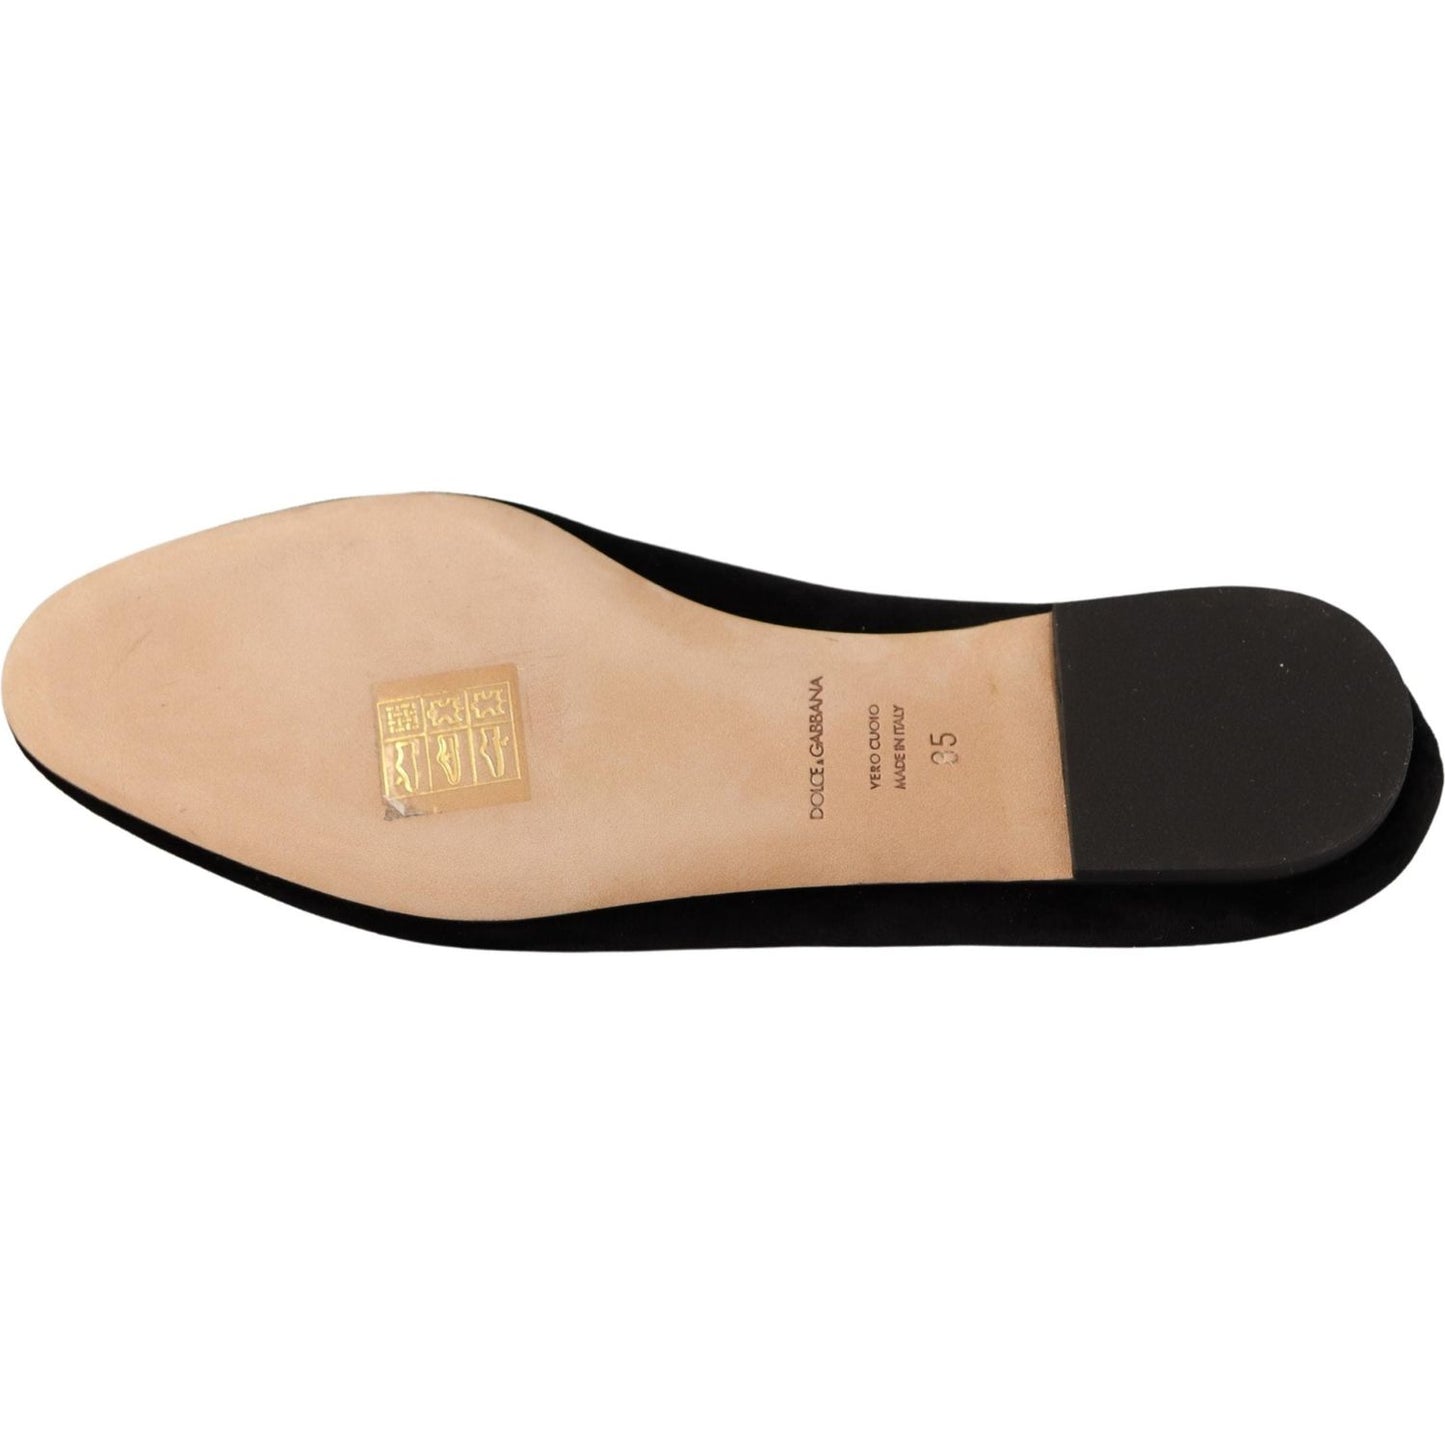 Dolce & GabbanaElegant Patent Leather Flat ShoesMcRichard Designer Brands£329.00